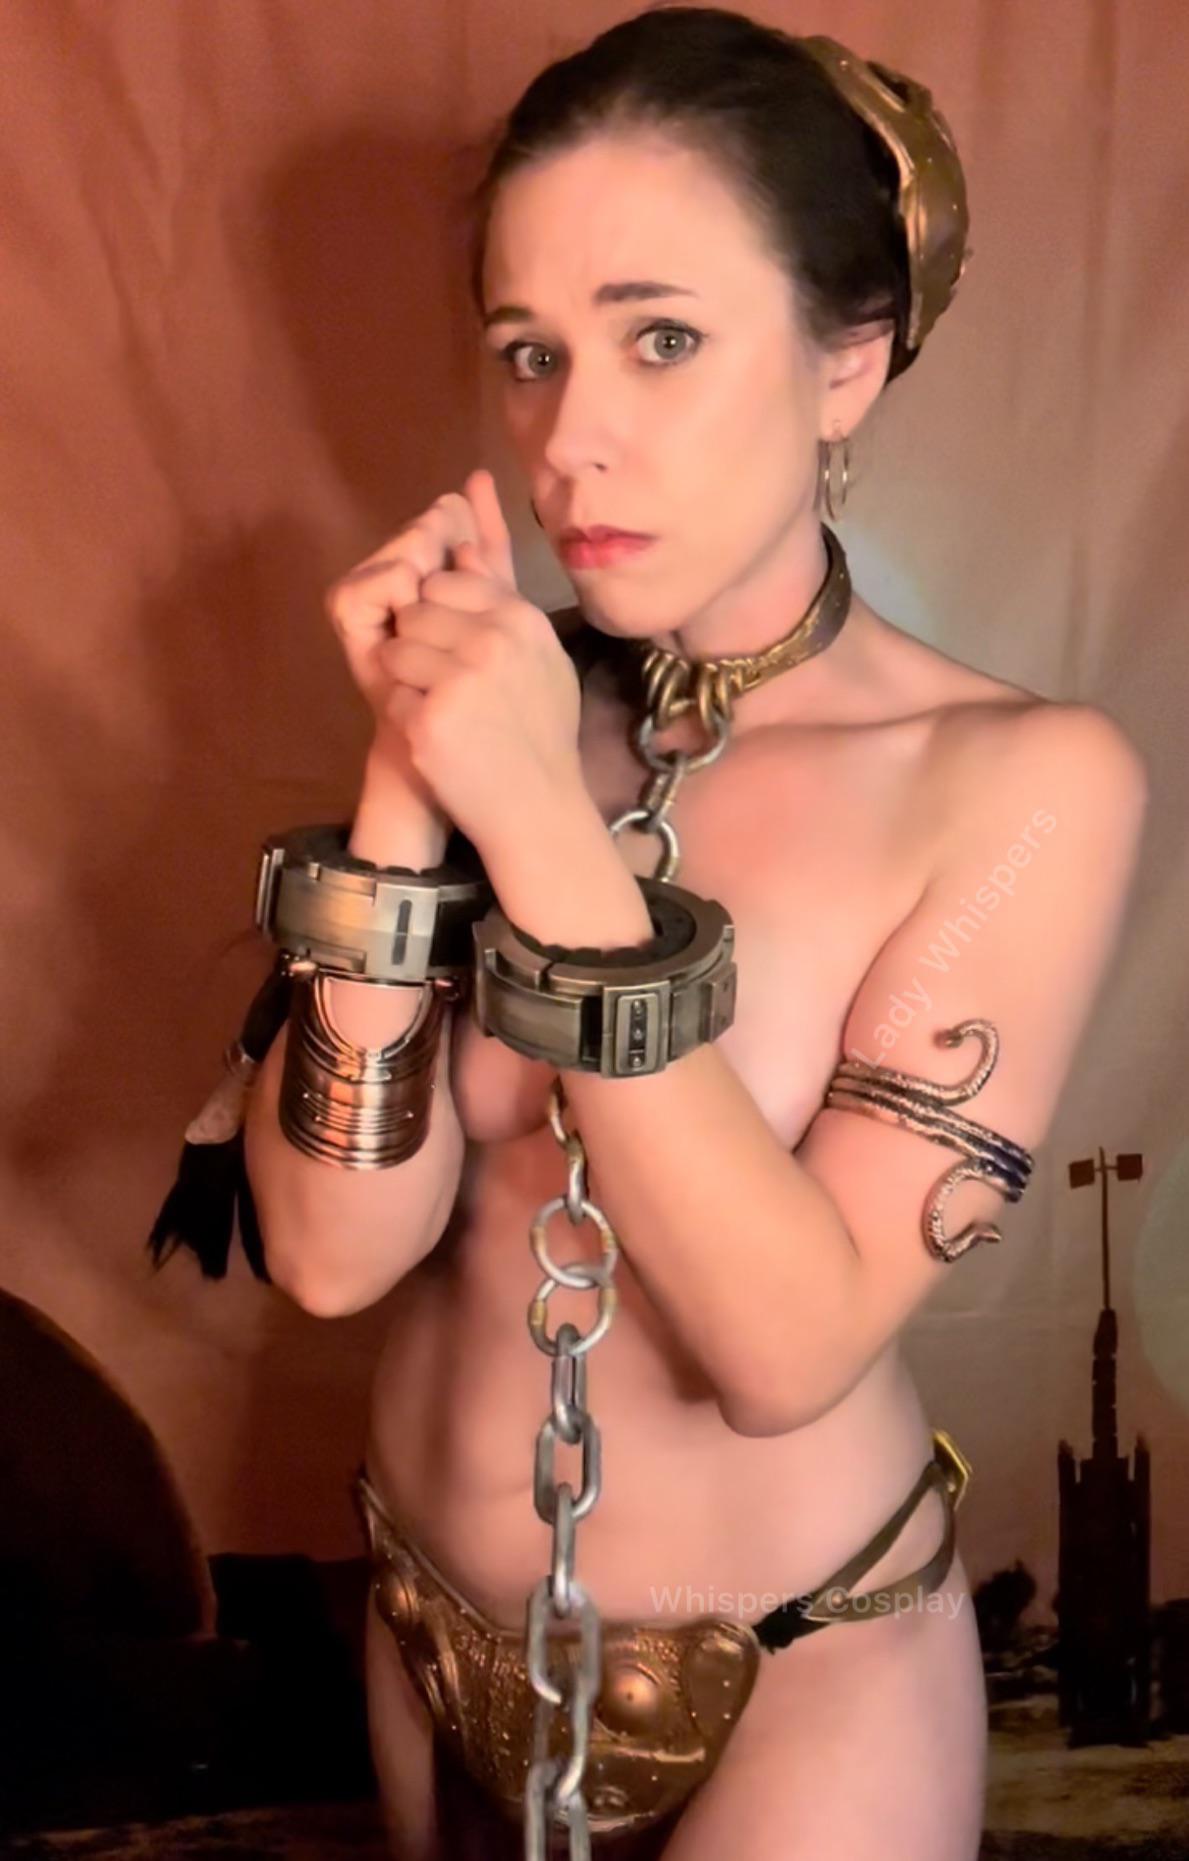 Sex Slave Star Wars Porn - Slave Leia in Tatooine got a new set of Star Wars cuffs.